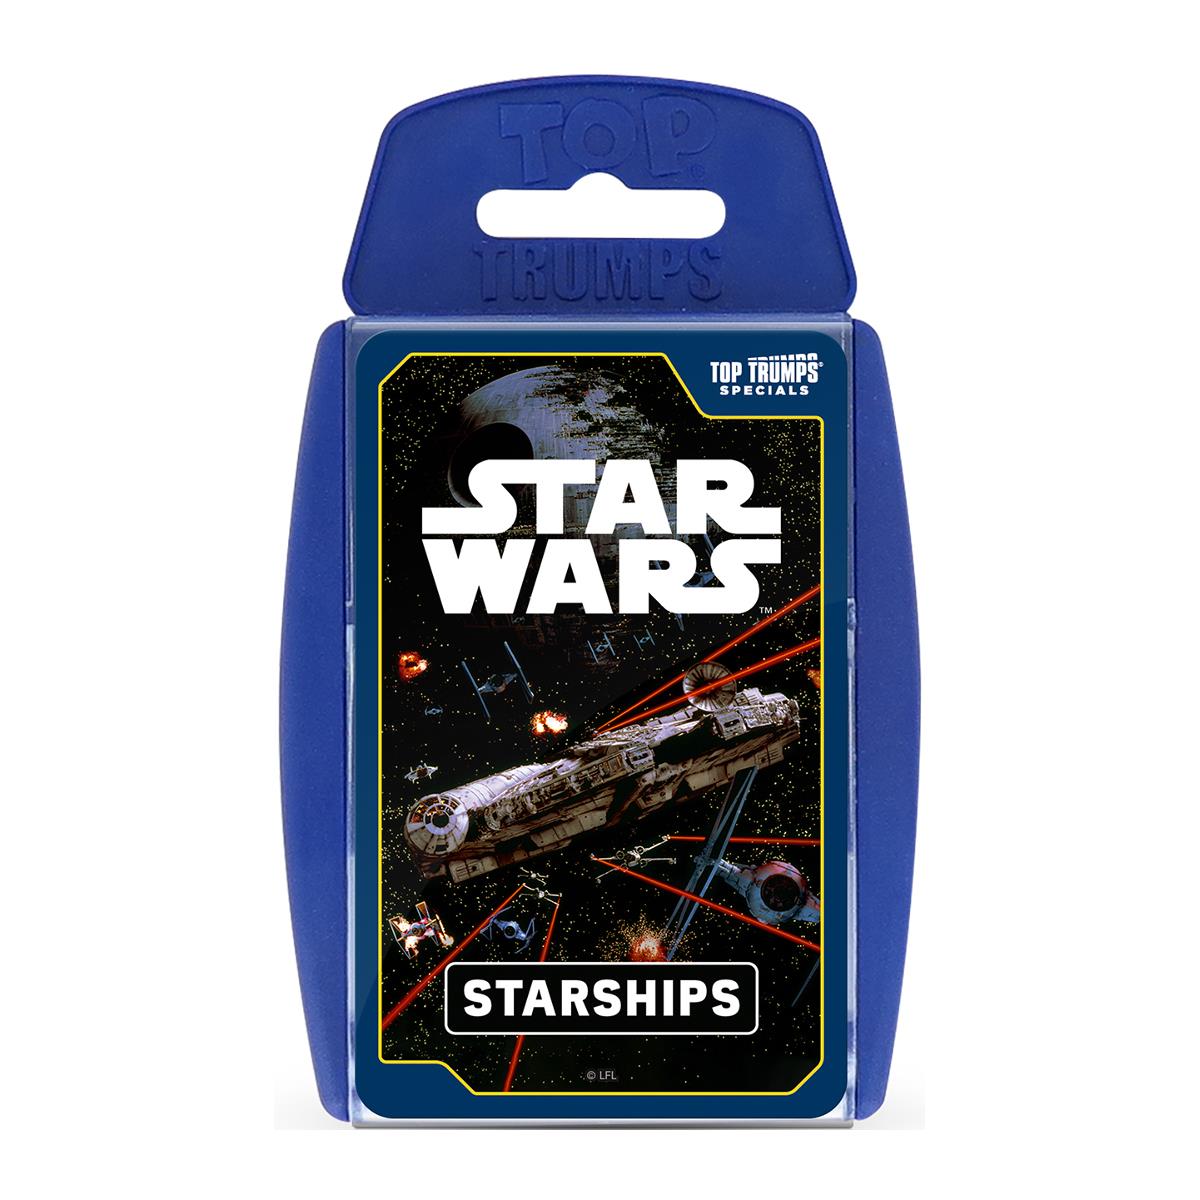 Star Wars Starships Top Trumps Card Game